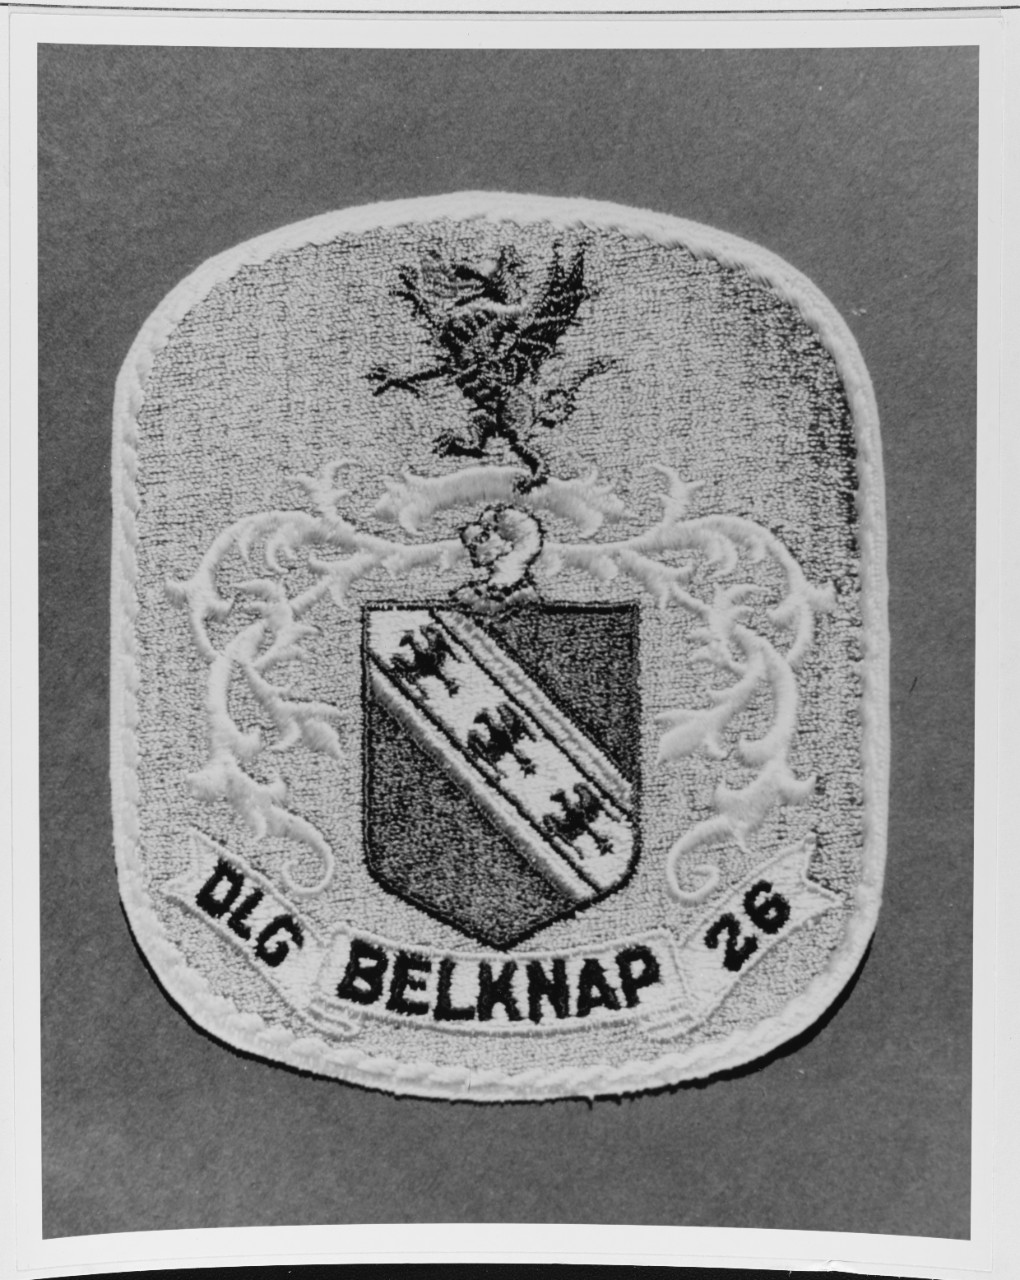 Insignia: USS BELKNAP (DLG - 26)